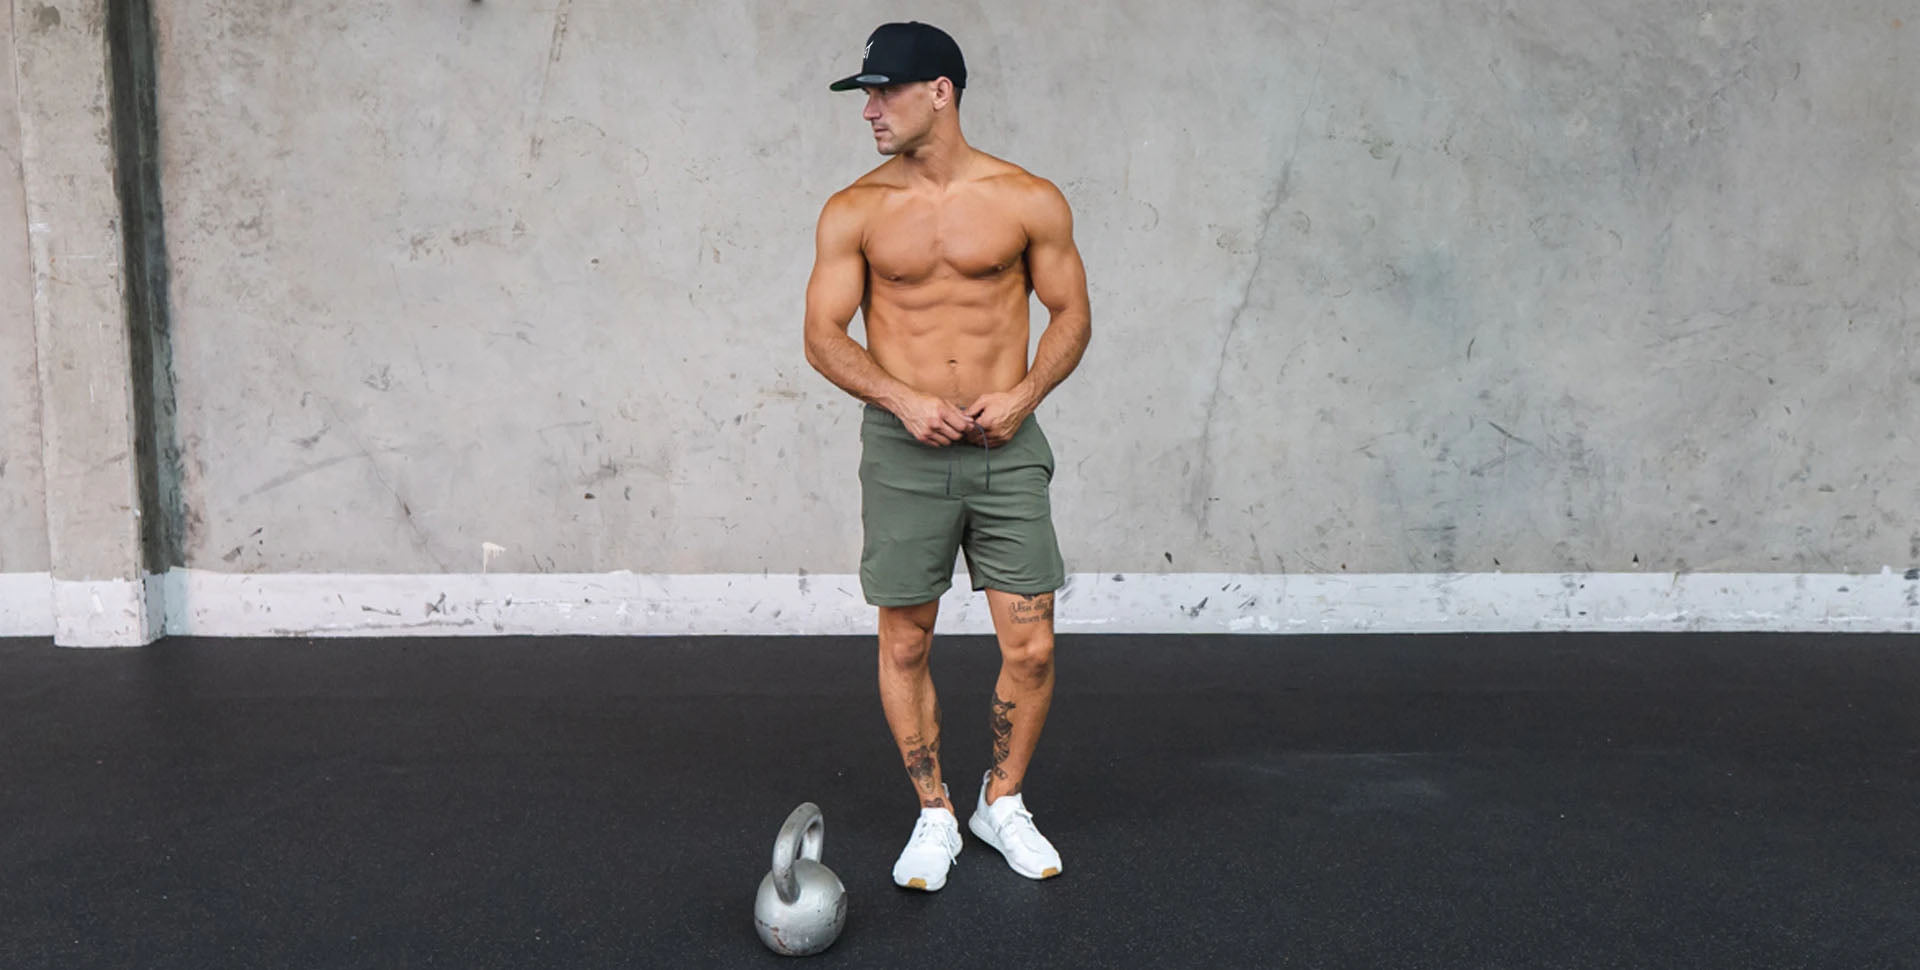 Gym Wear For Men, Fitness Blog